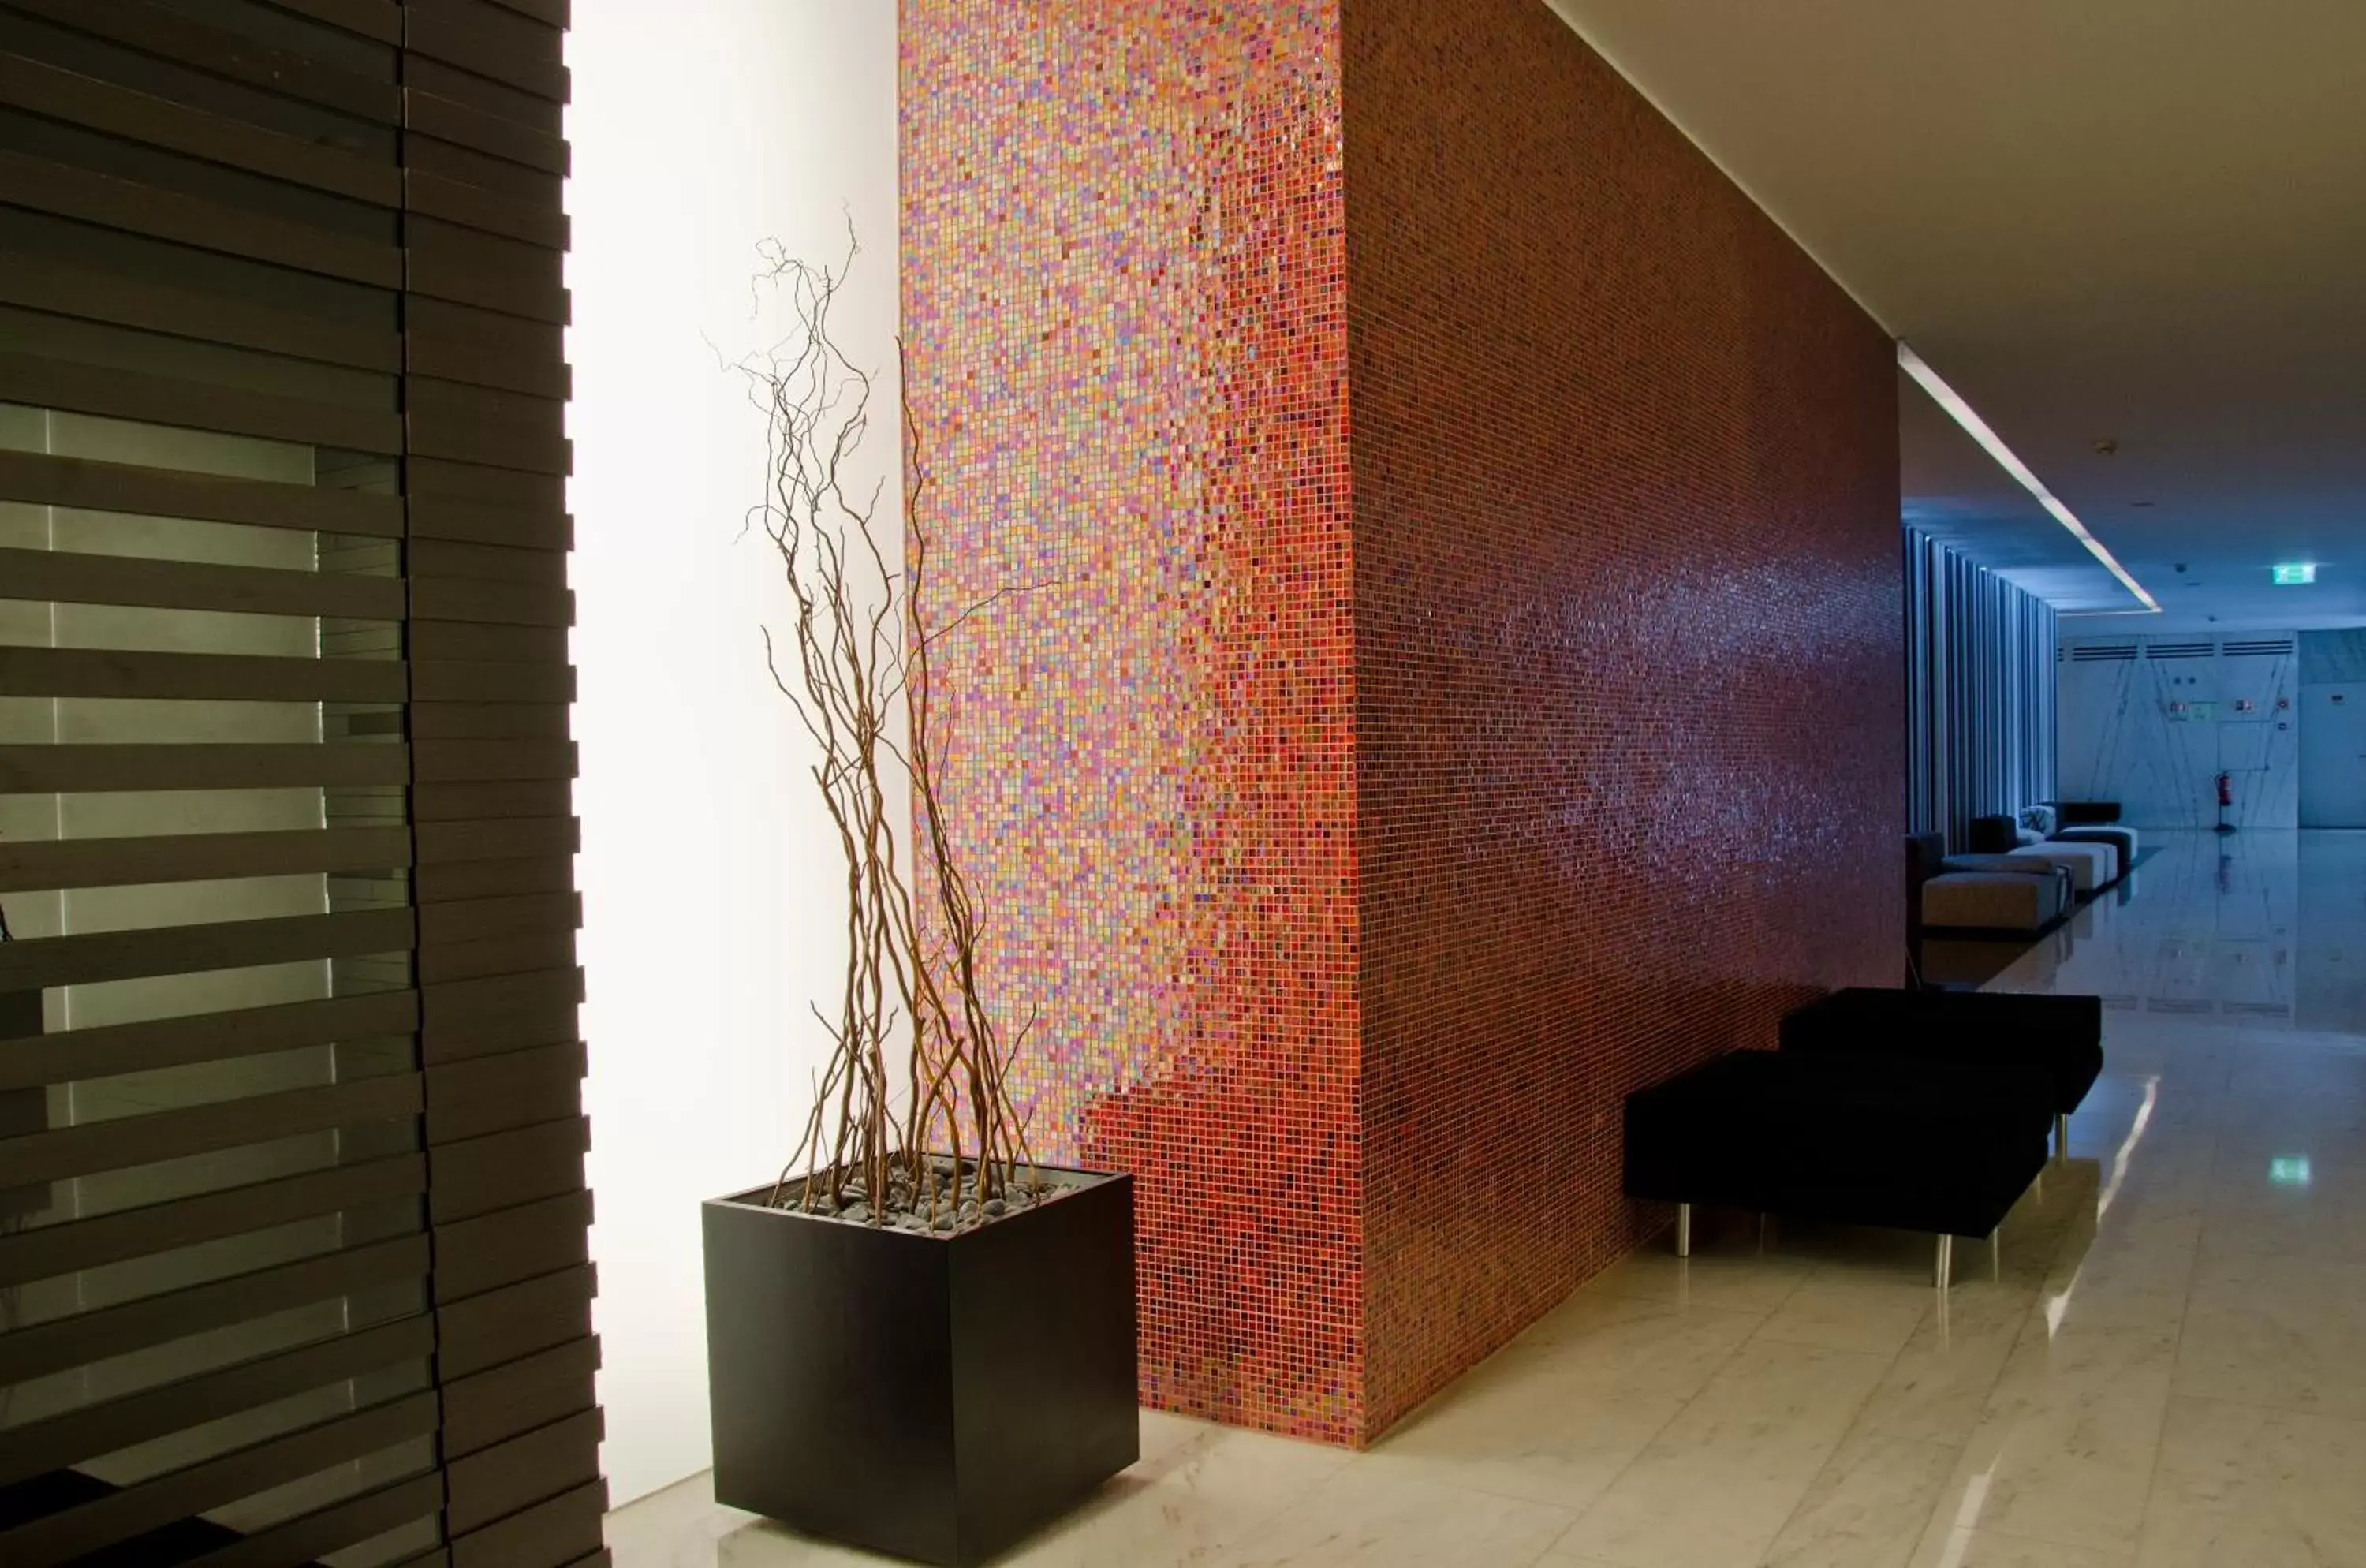 Decorative detail in VIP Grand Lisboa Hotel & Spa